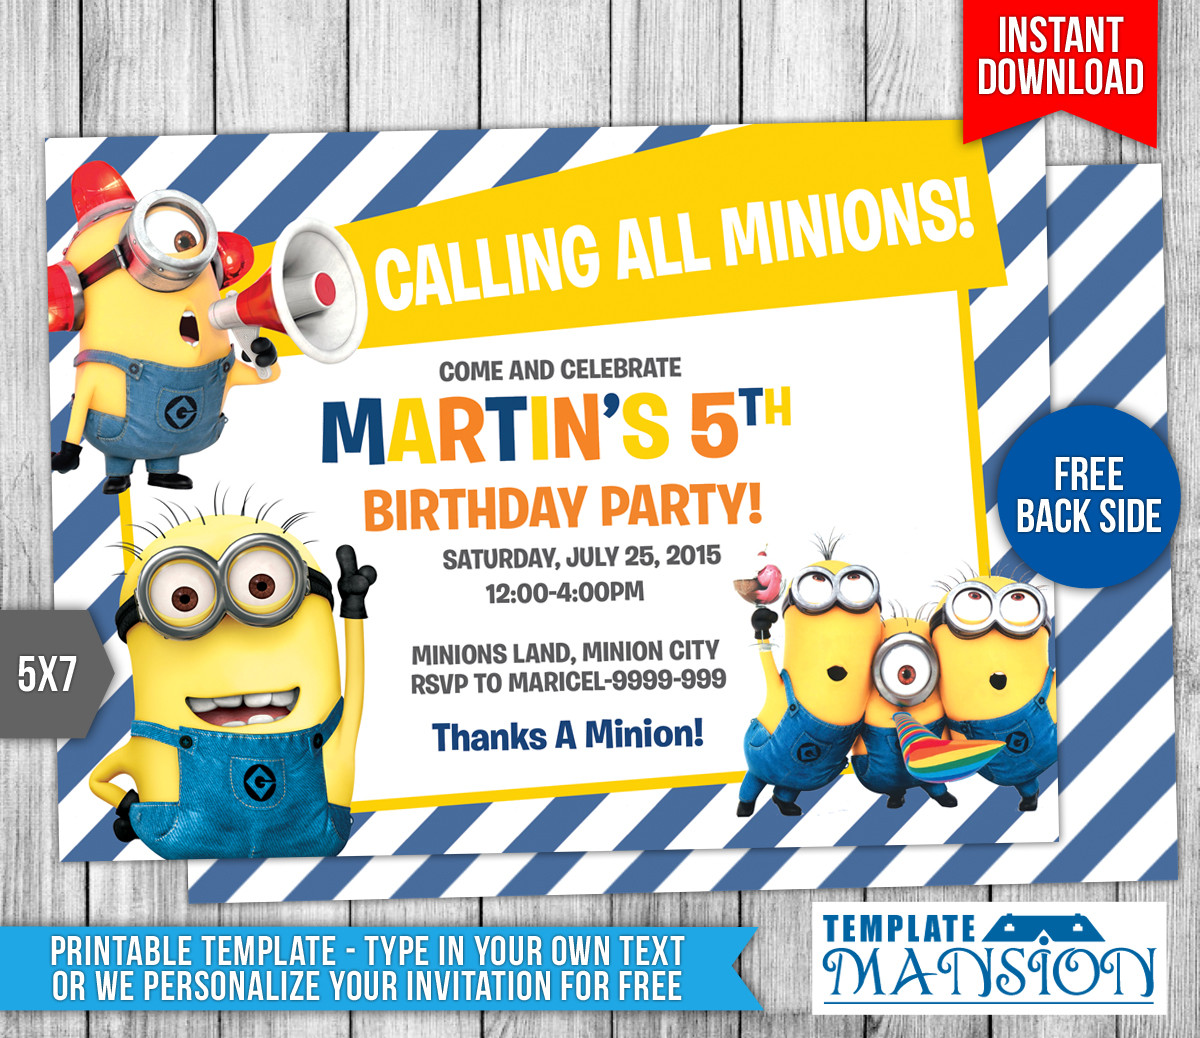 Minions Birthday Party Invitation
 Minions Birthday Invitation 7 by templatemansion on